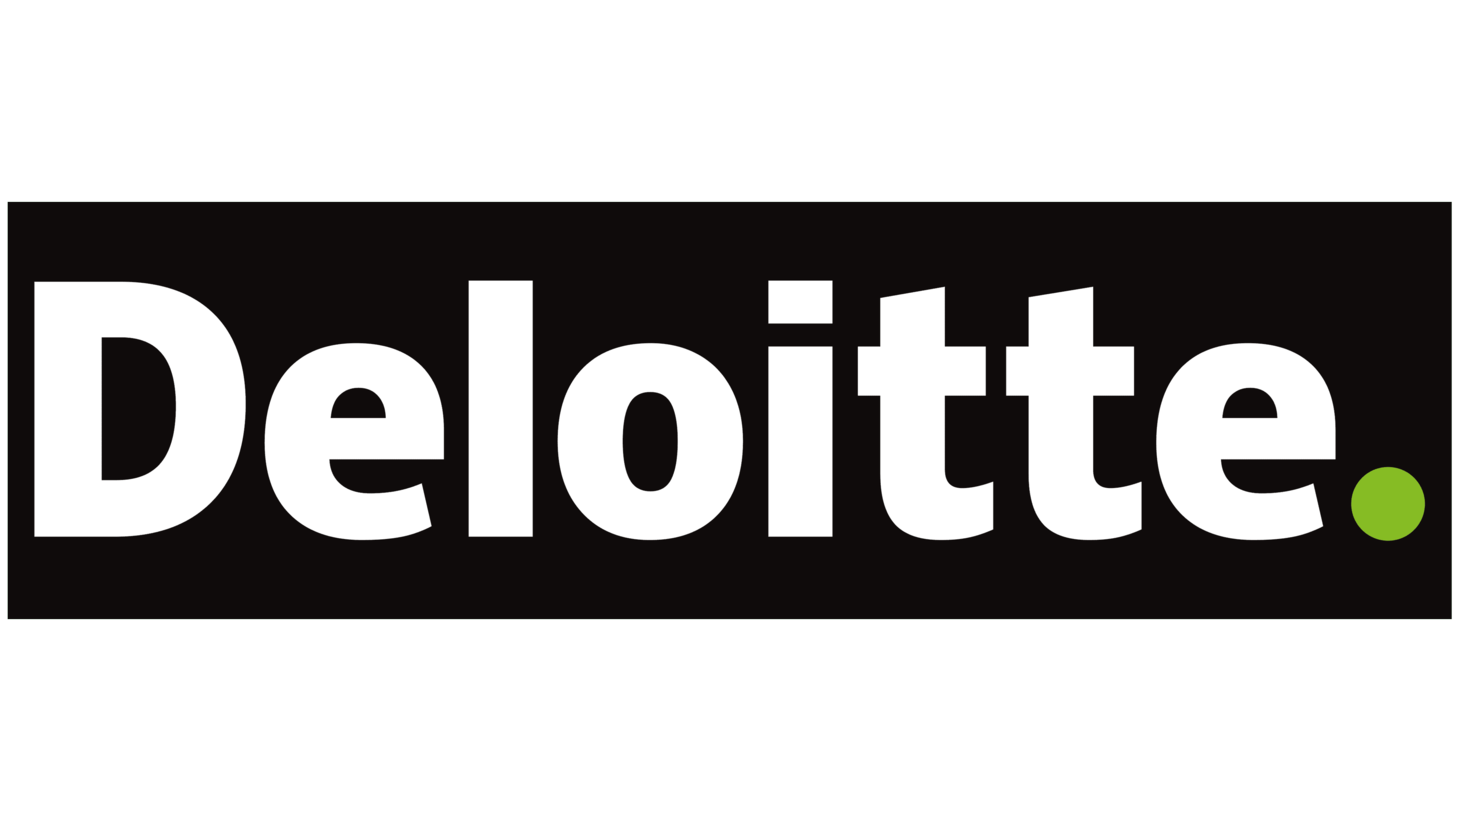 Deloitte sign